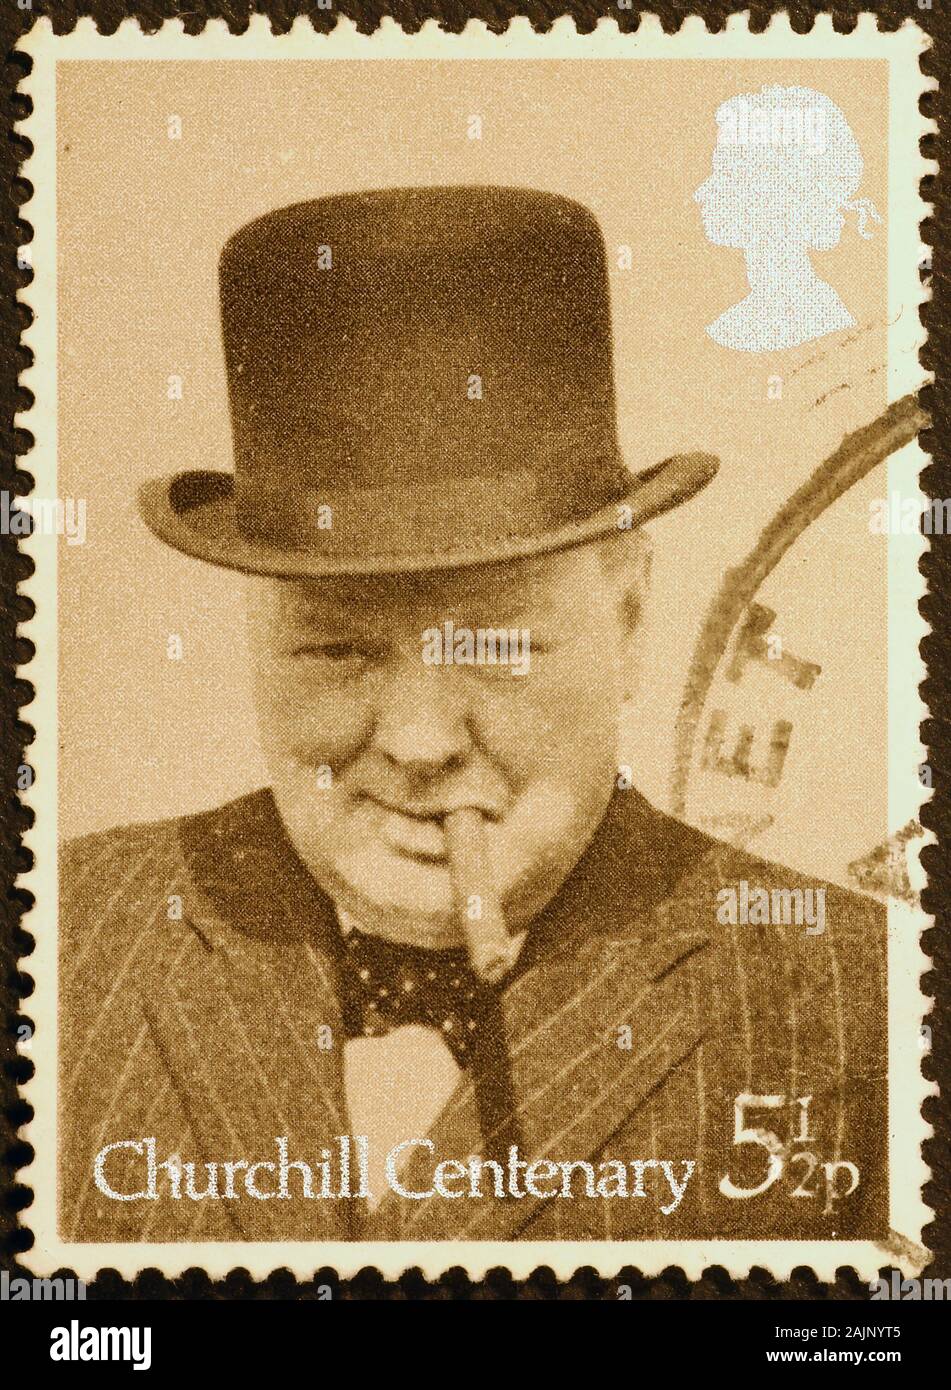 Portrait of Winston Churchill on british postage stamp Stock Photo